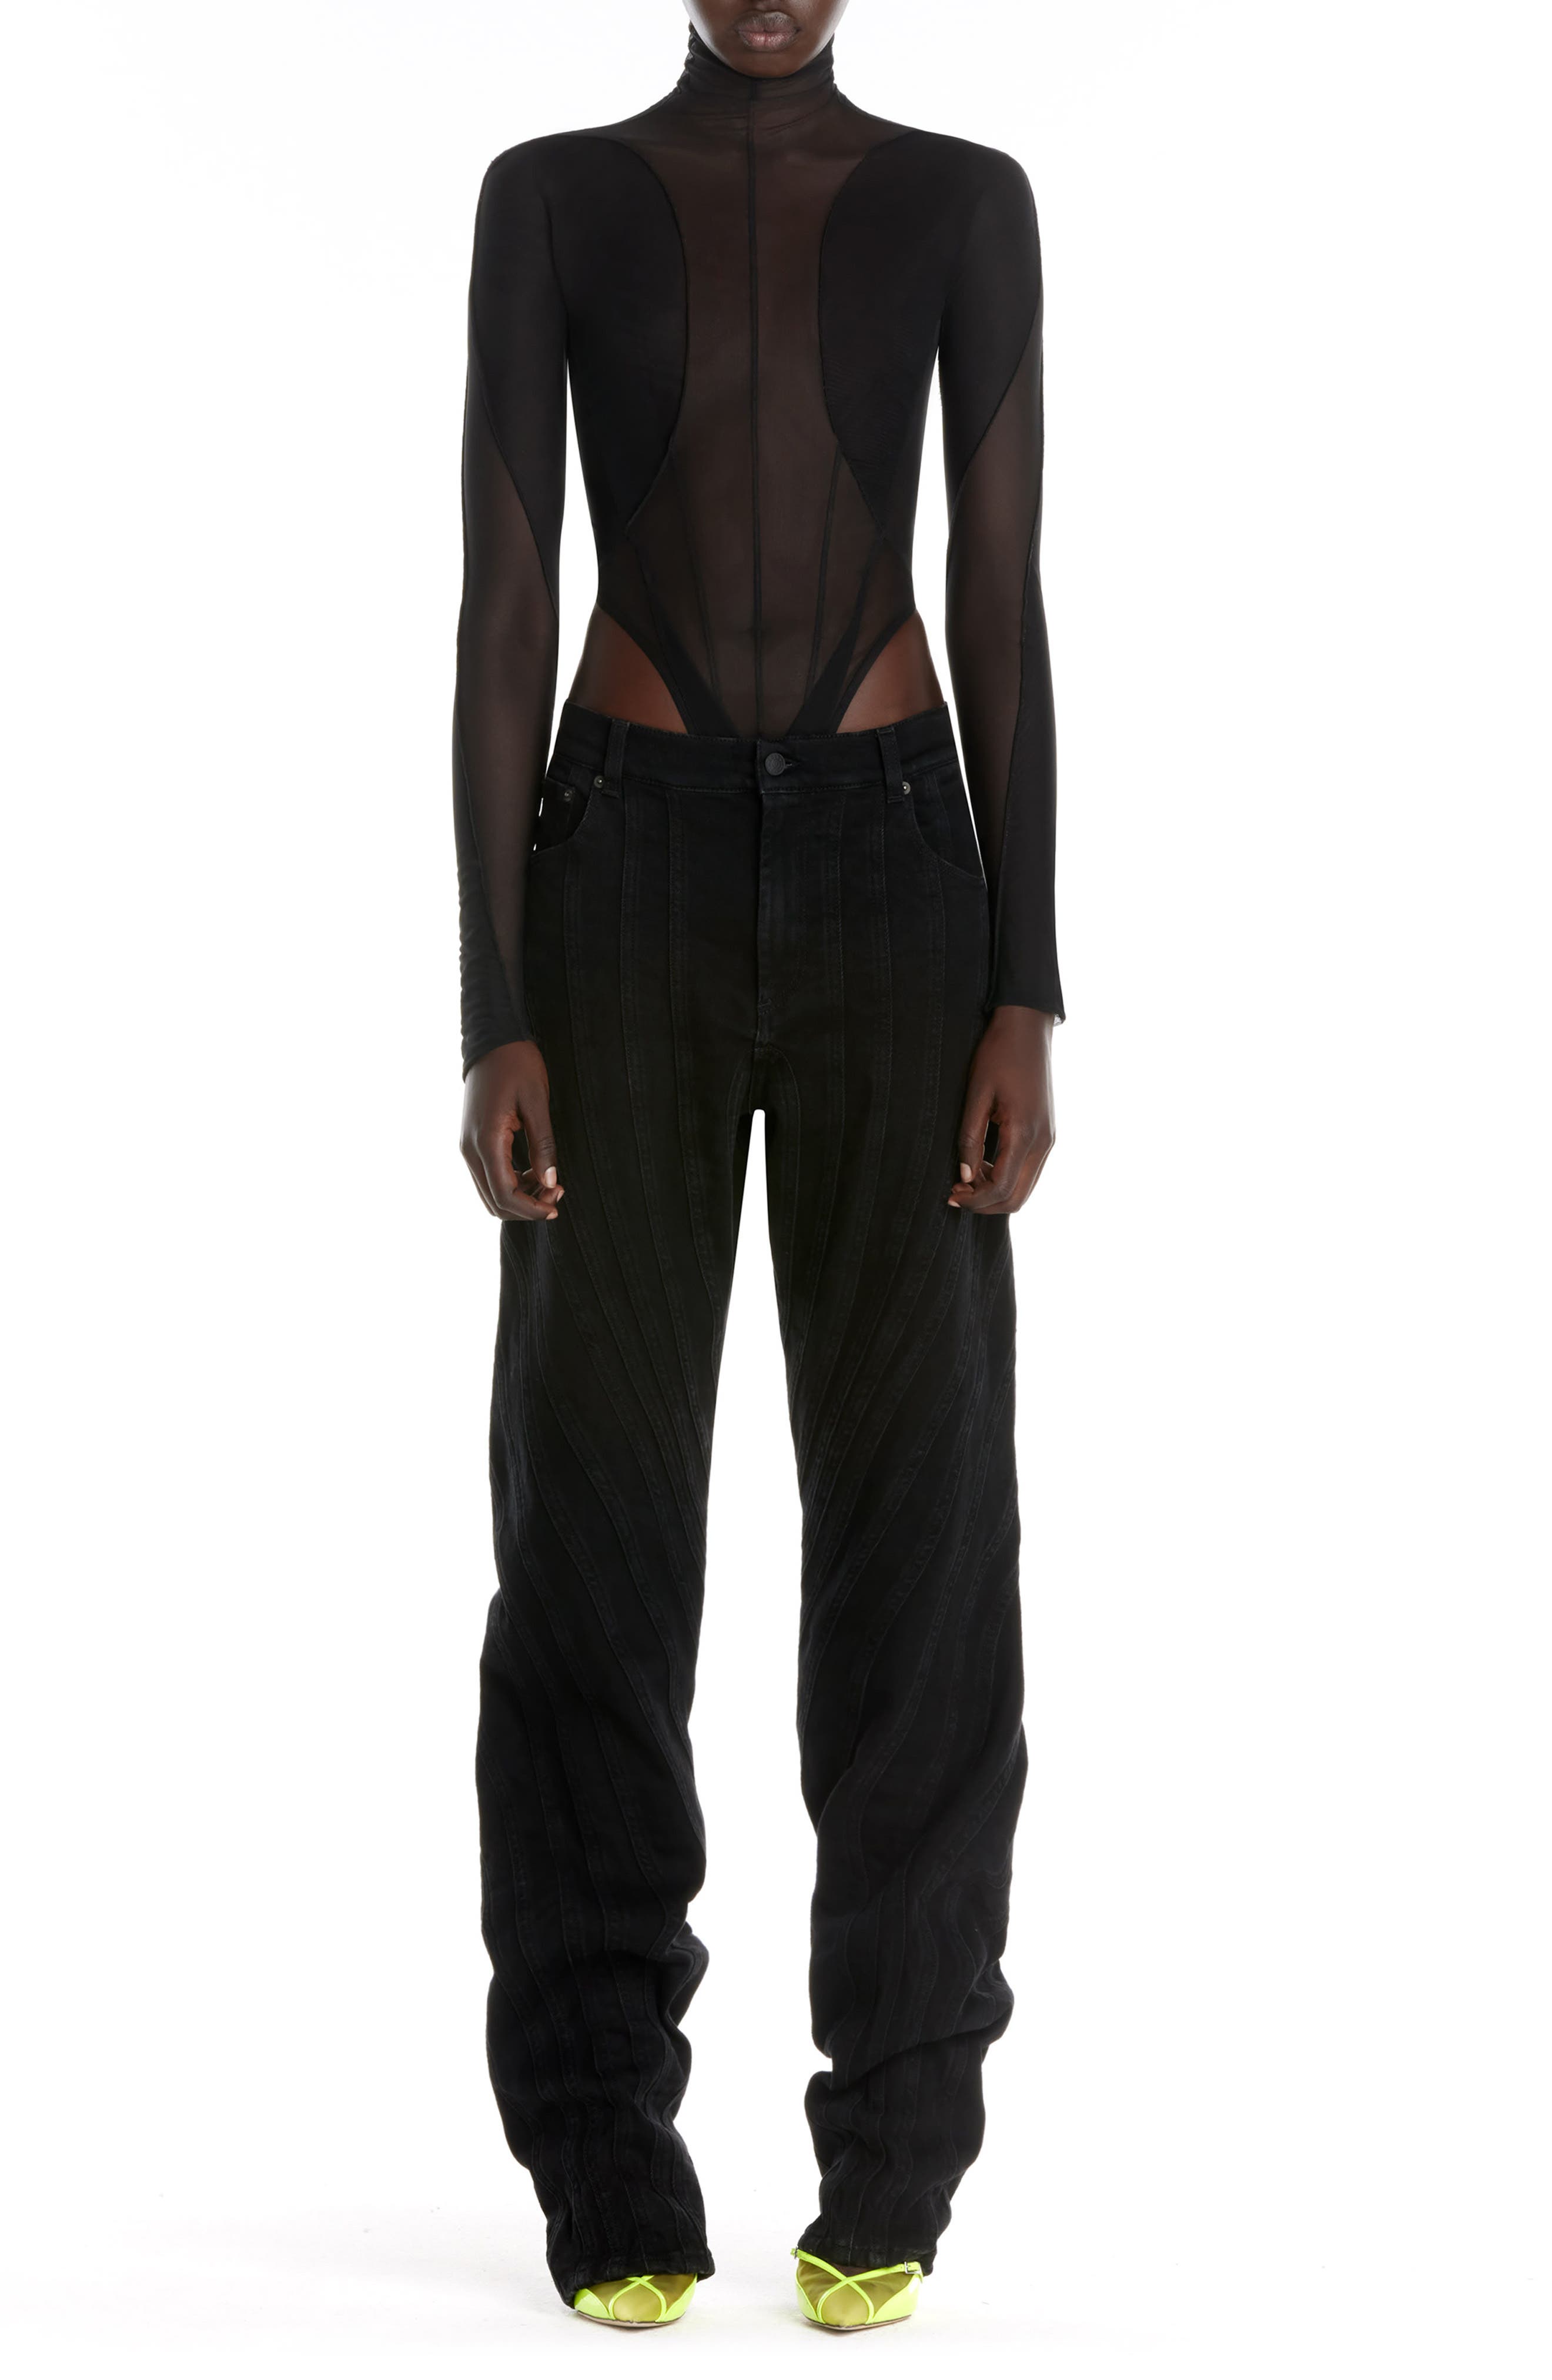 MUGLER Long Sleeve Illusion Mesh Bodysuit in Black at Nordstrom, Size 10 Us